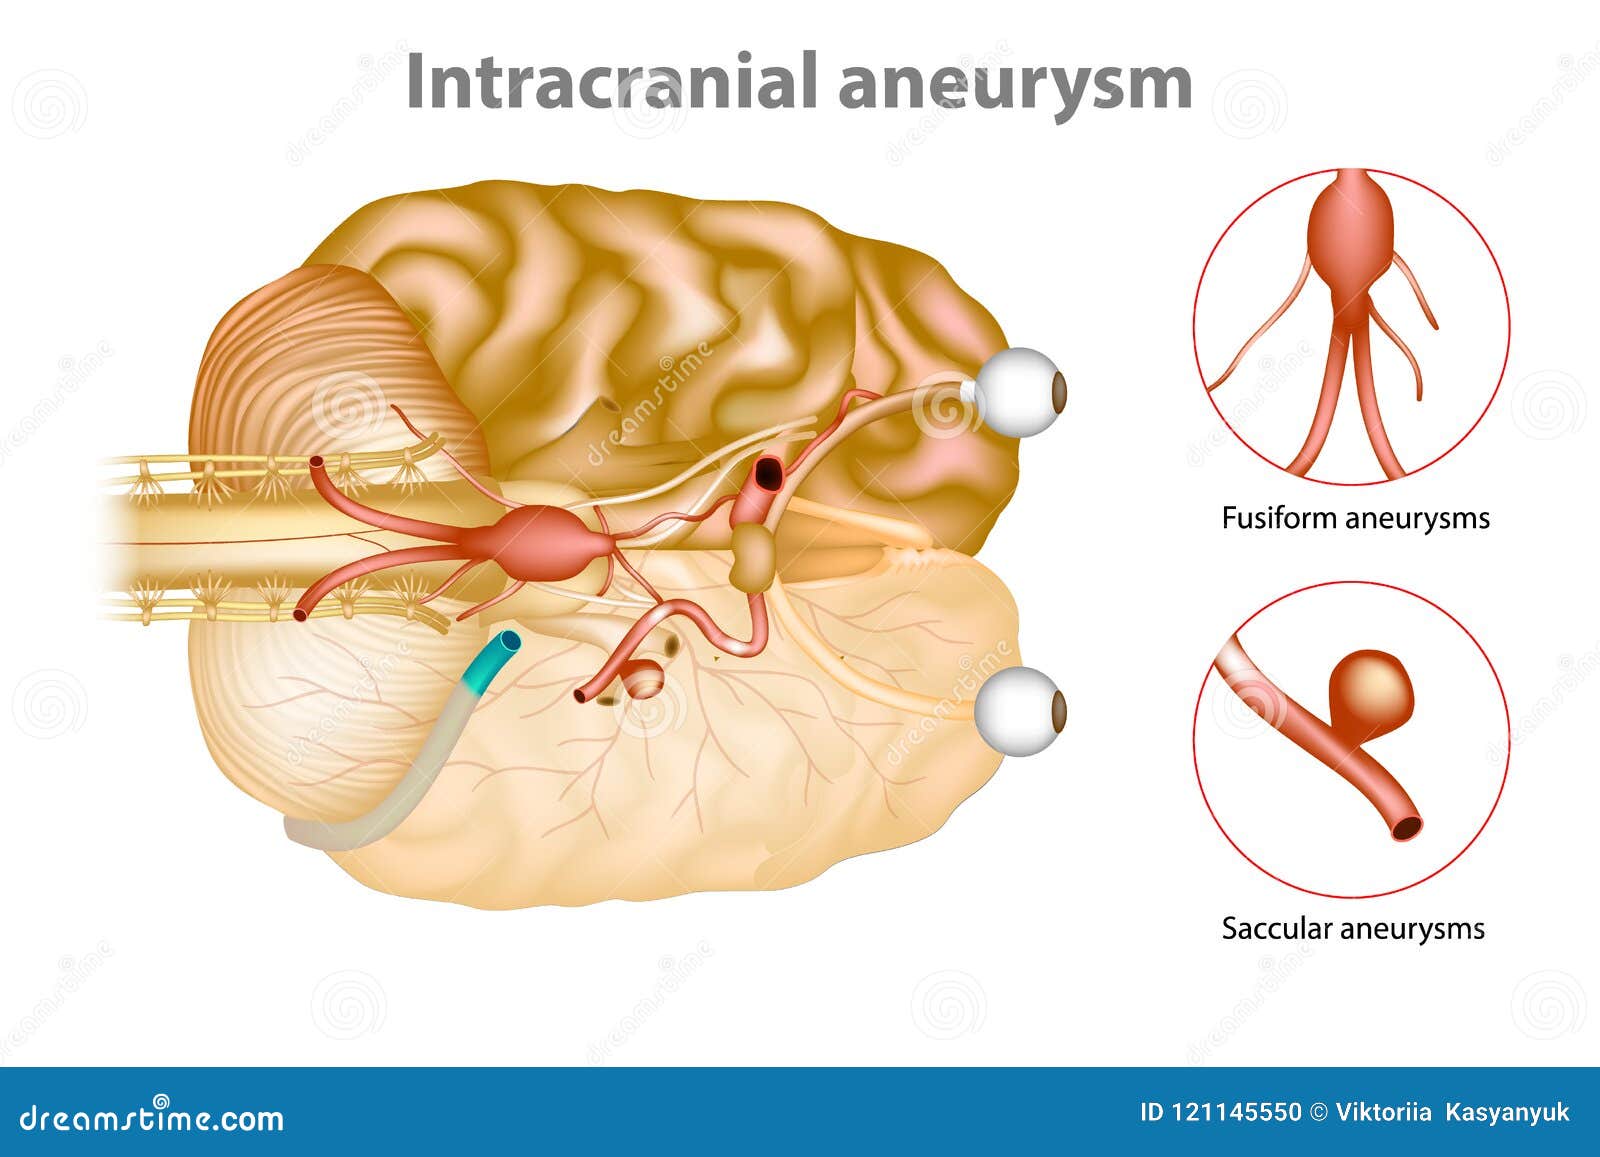 intracranial aneurysm or brain aneurysm.